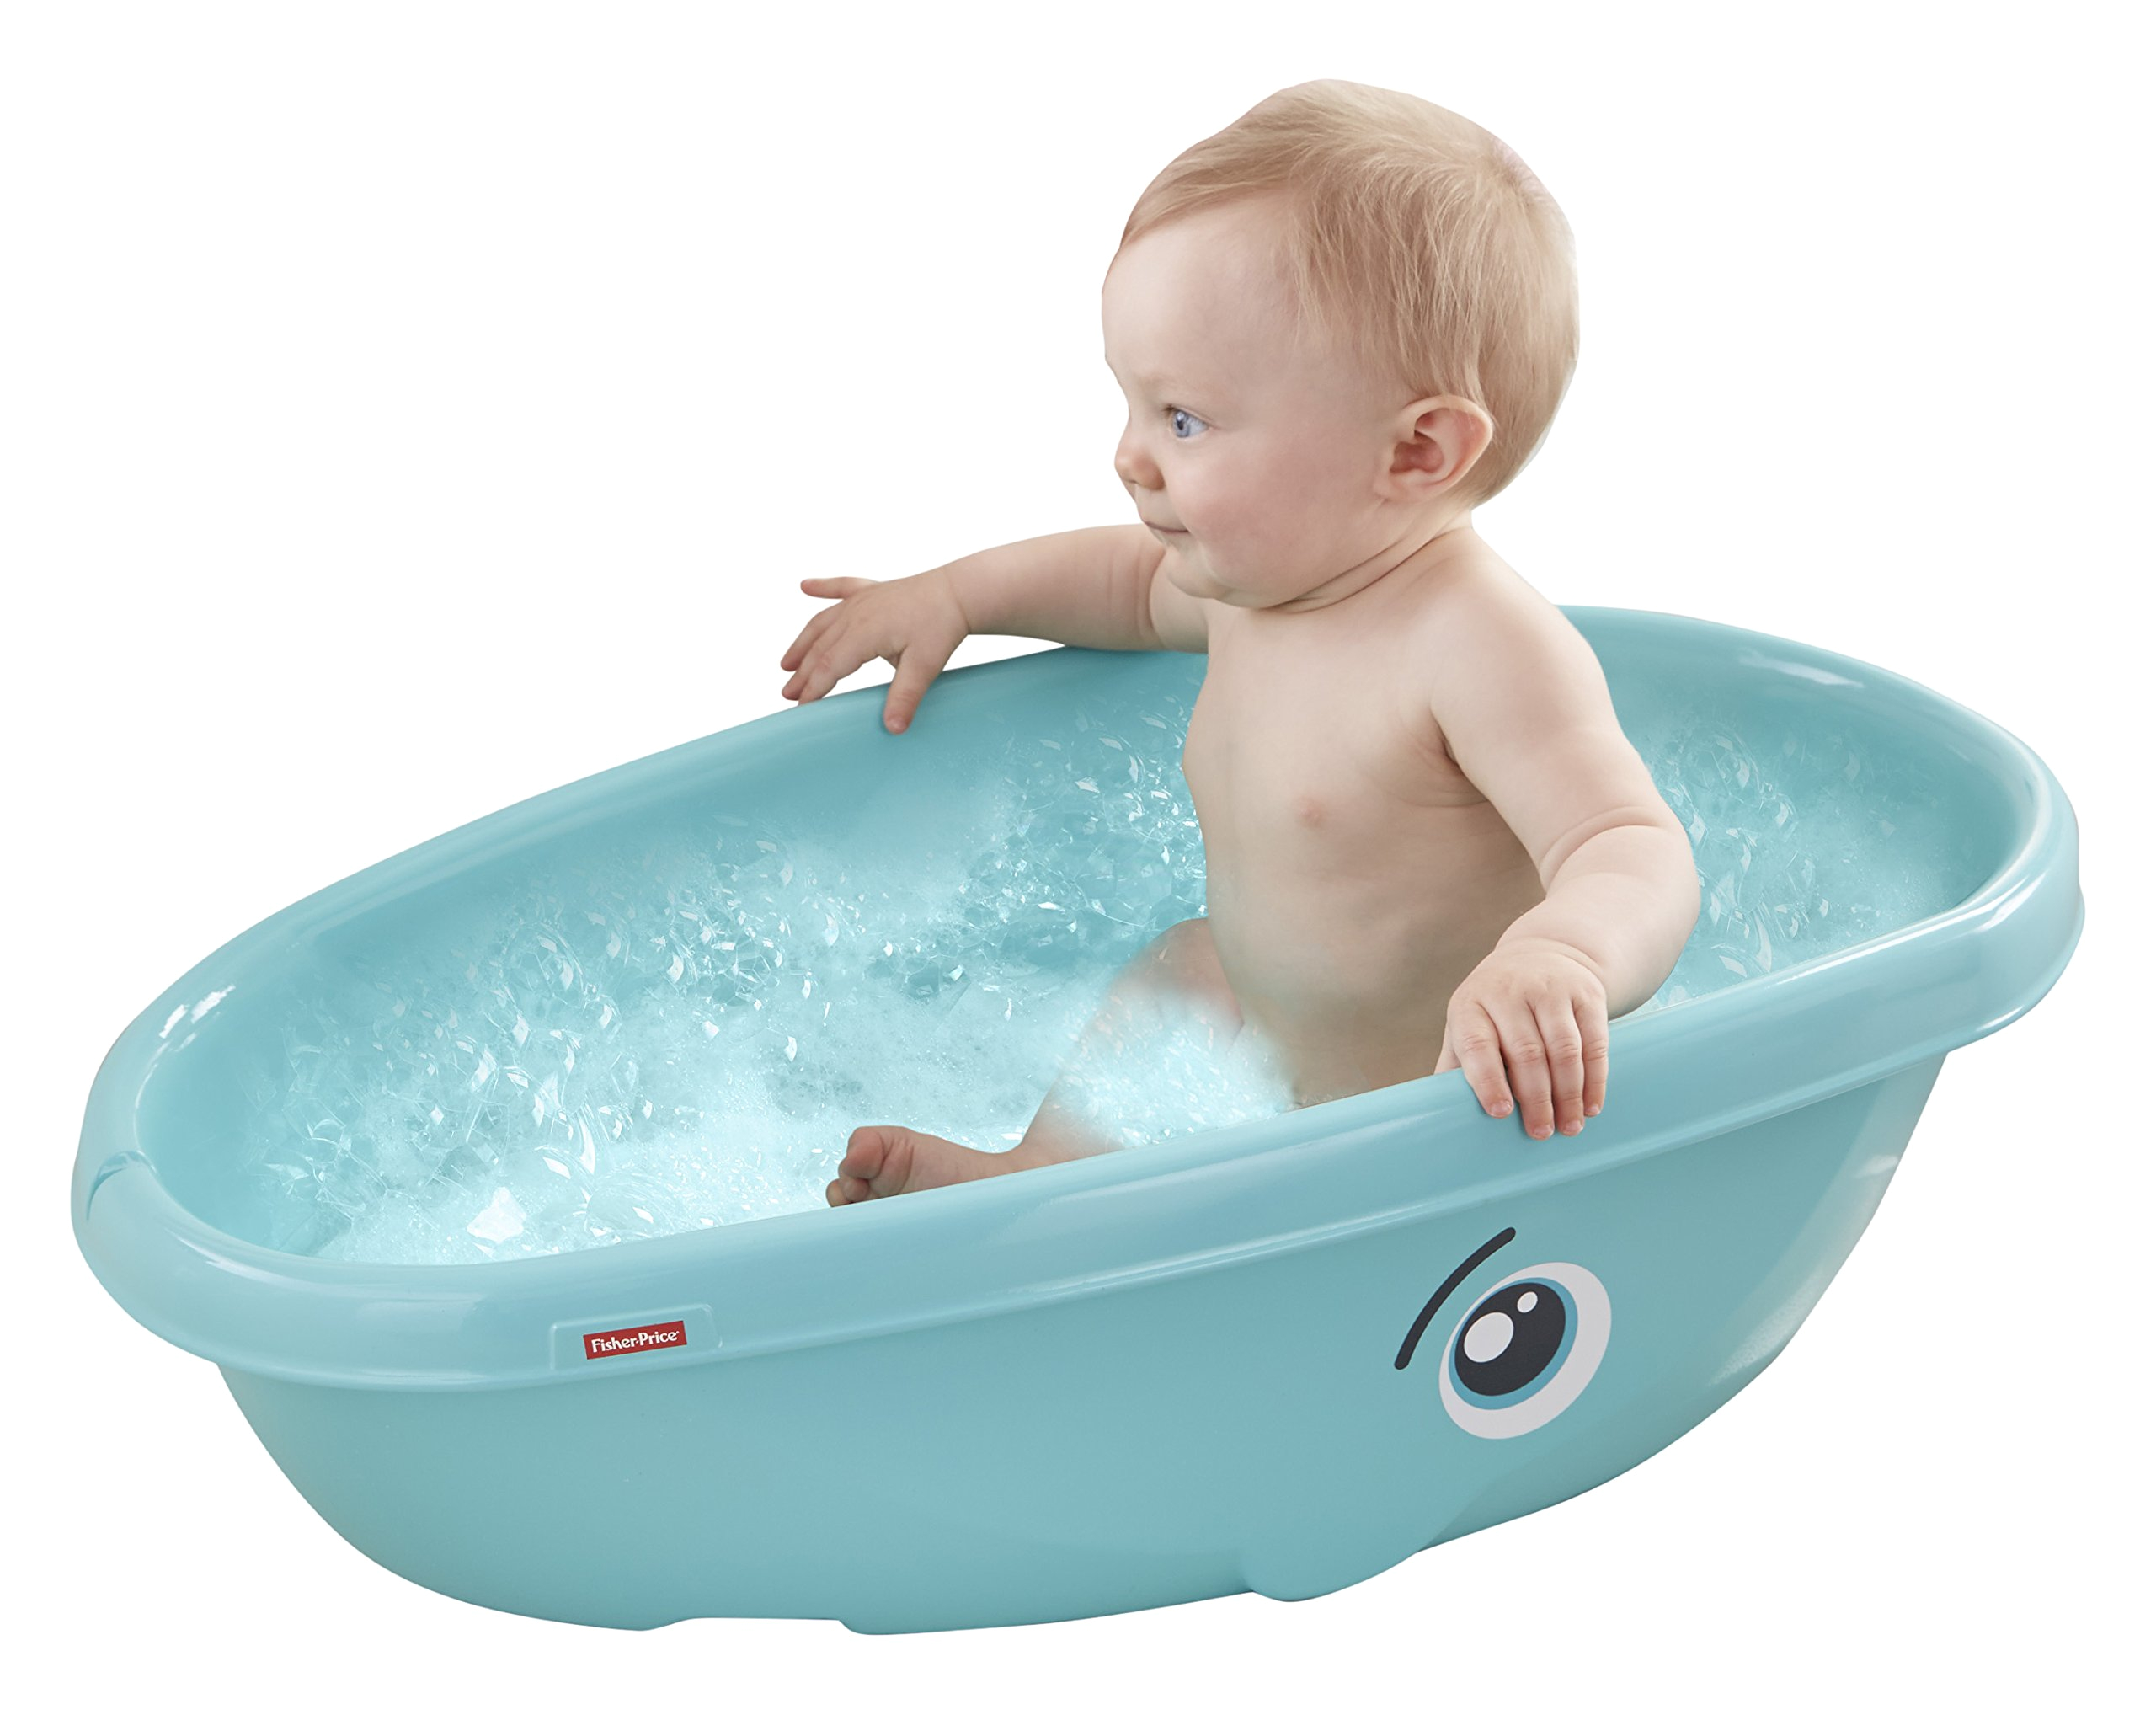 What Baby Bath Tub is Best Fisher Price Whale Baby Bathtub Kids toddler Newborn